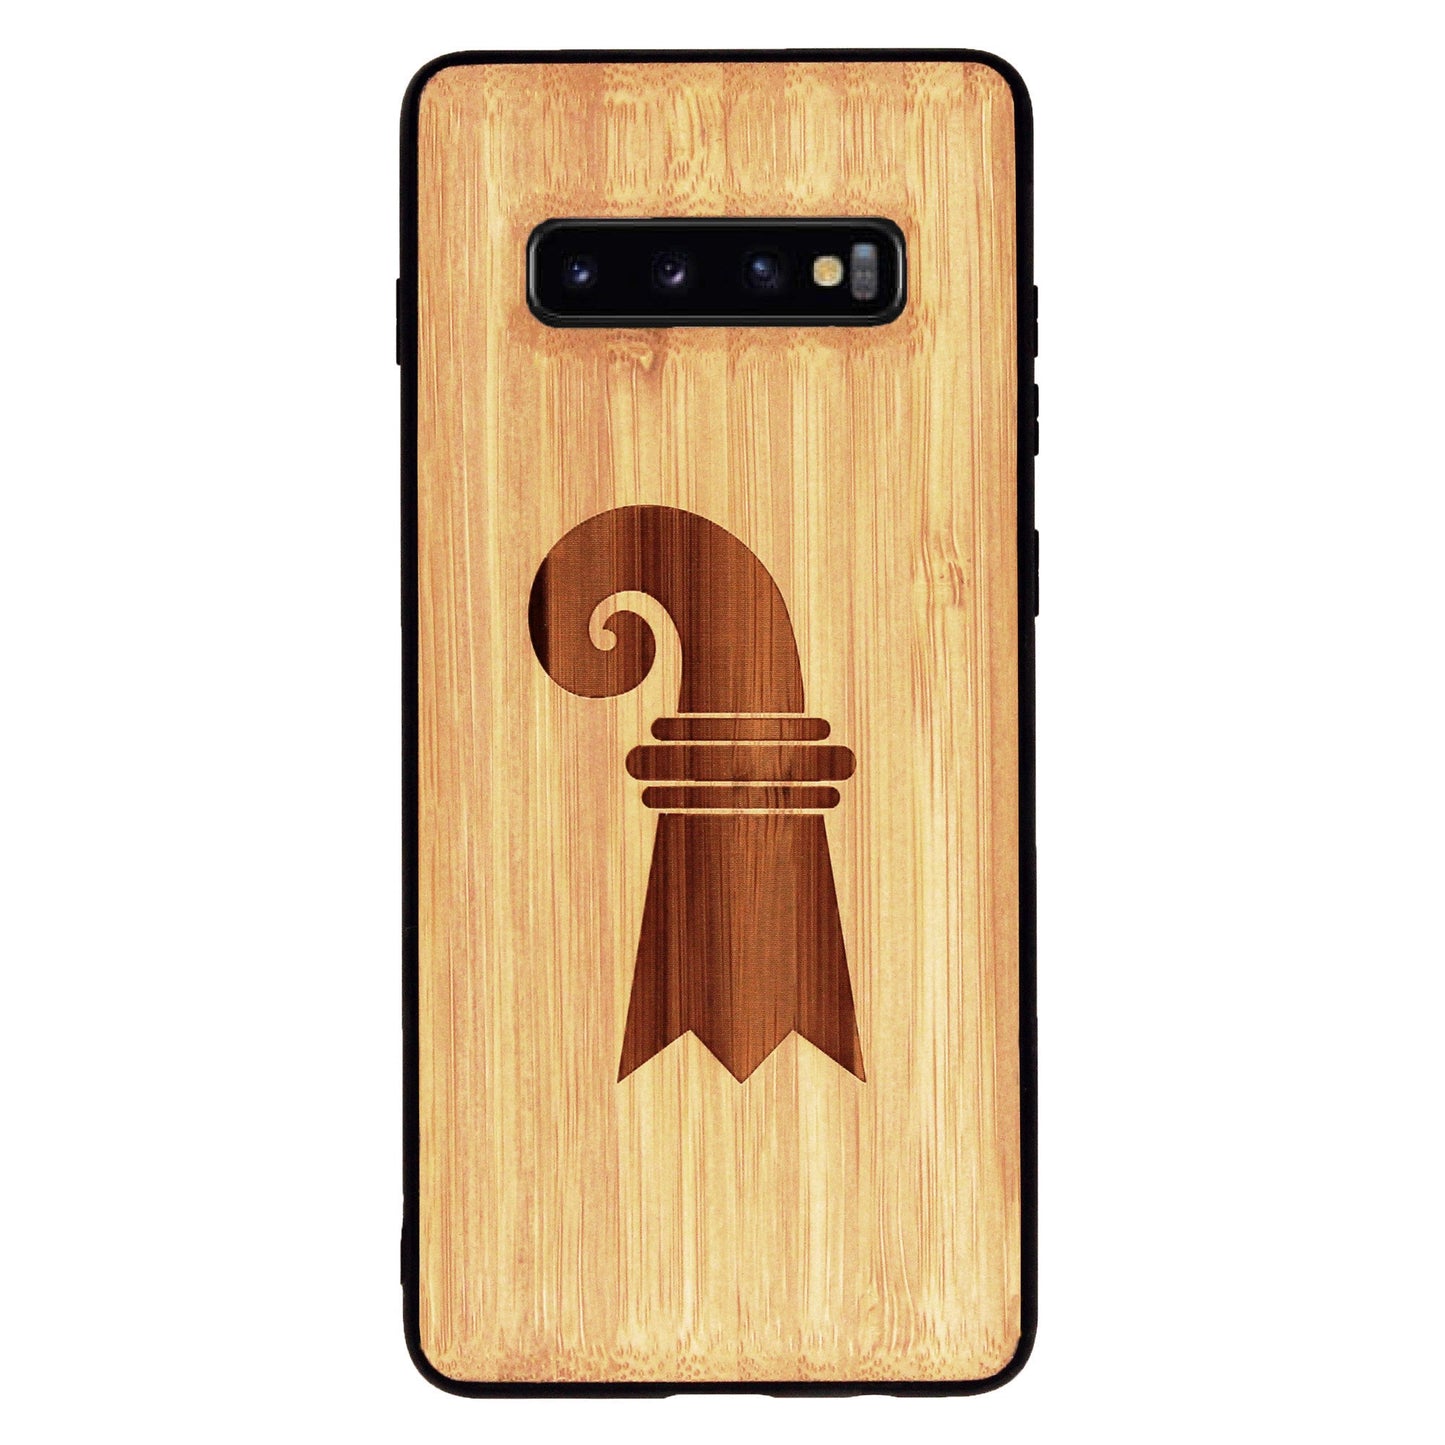 Baslerstab Eden case made of bamboo for Samsung Galaxy S10